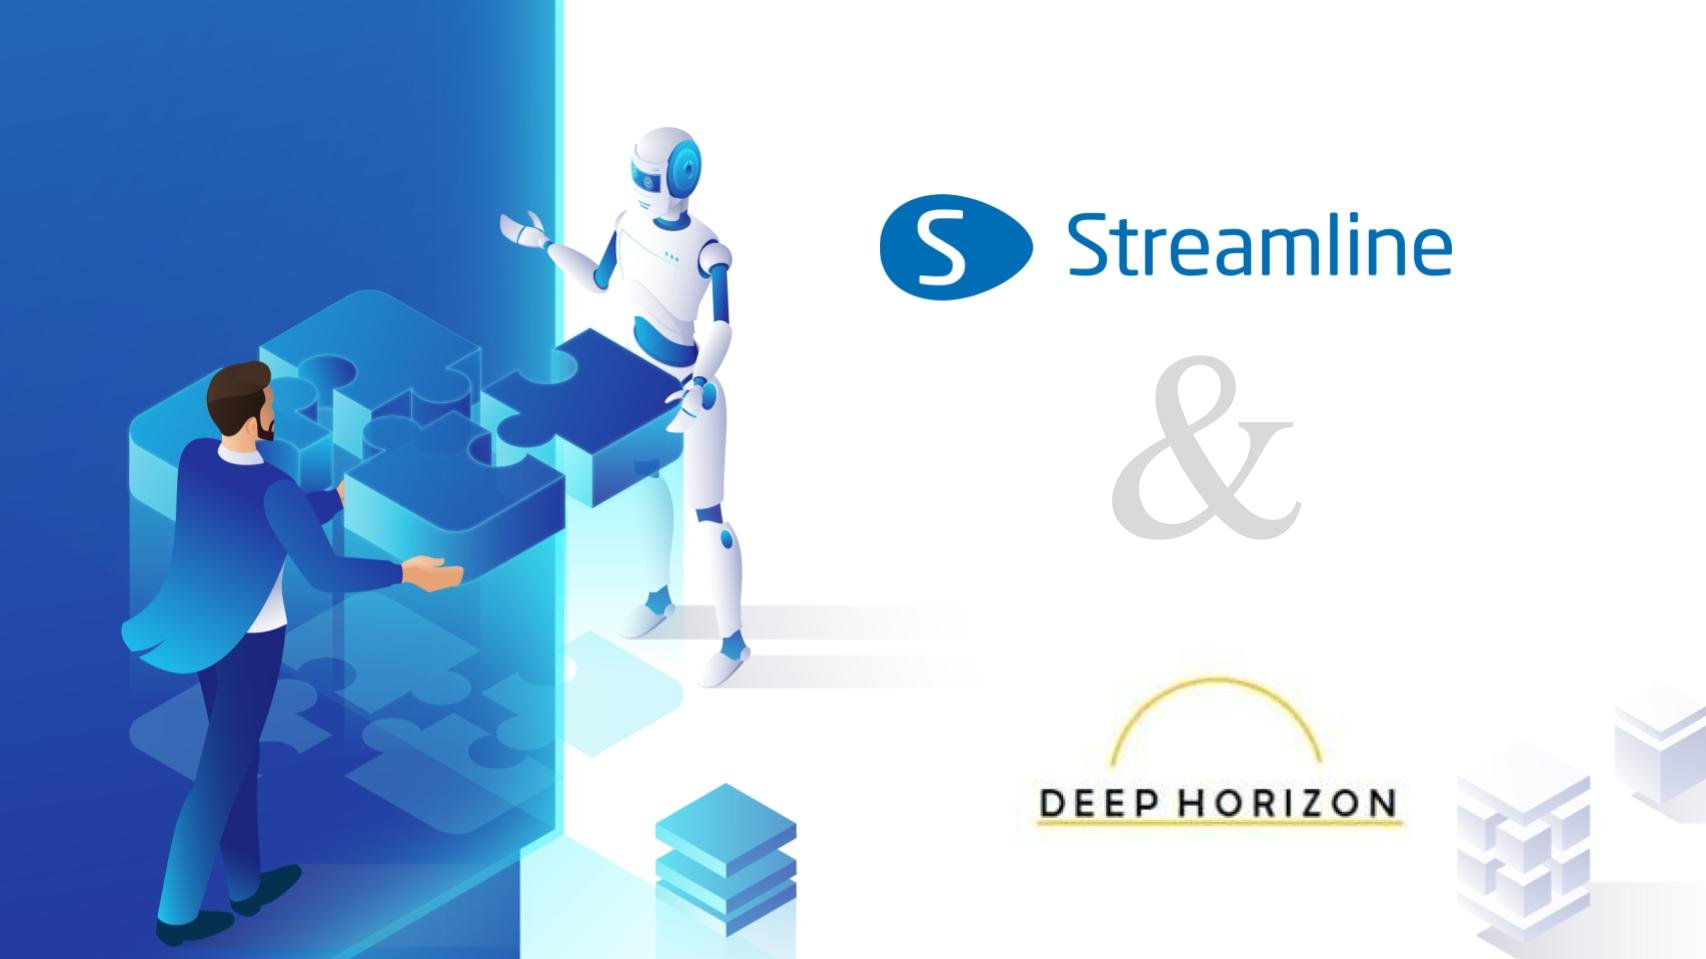 GMDH Streamline는 Deep Horizon Solutions와 협력하여 공급망 복원력 강화